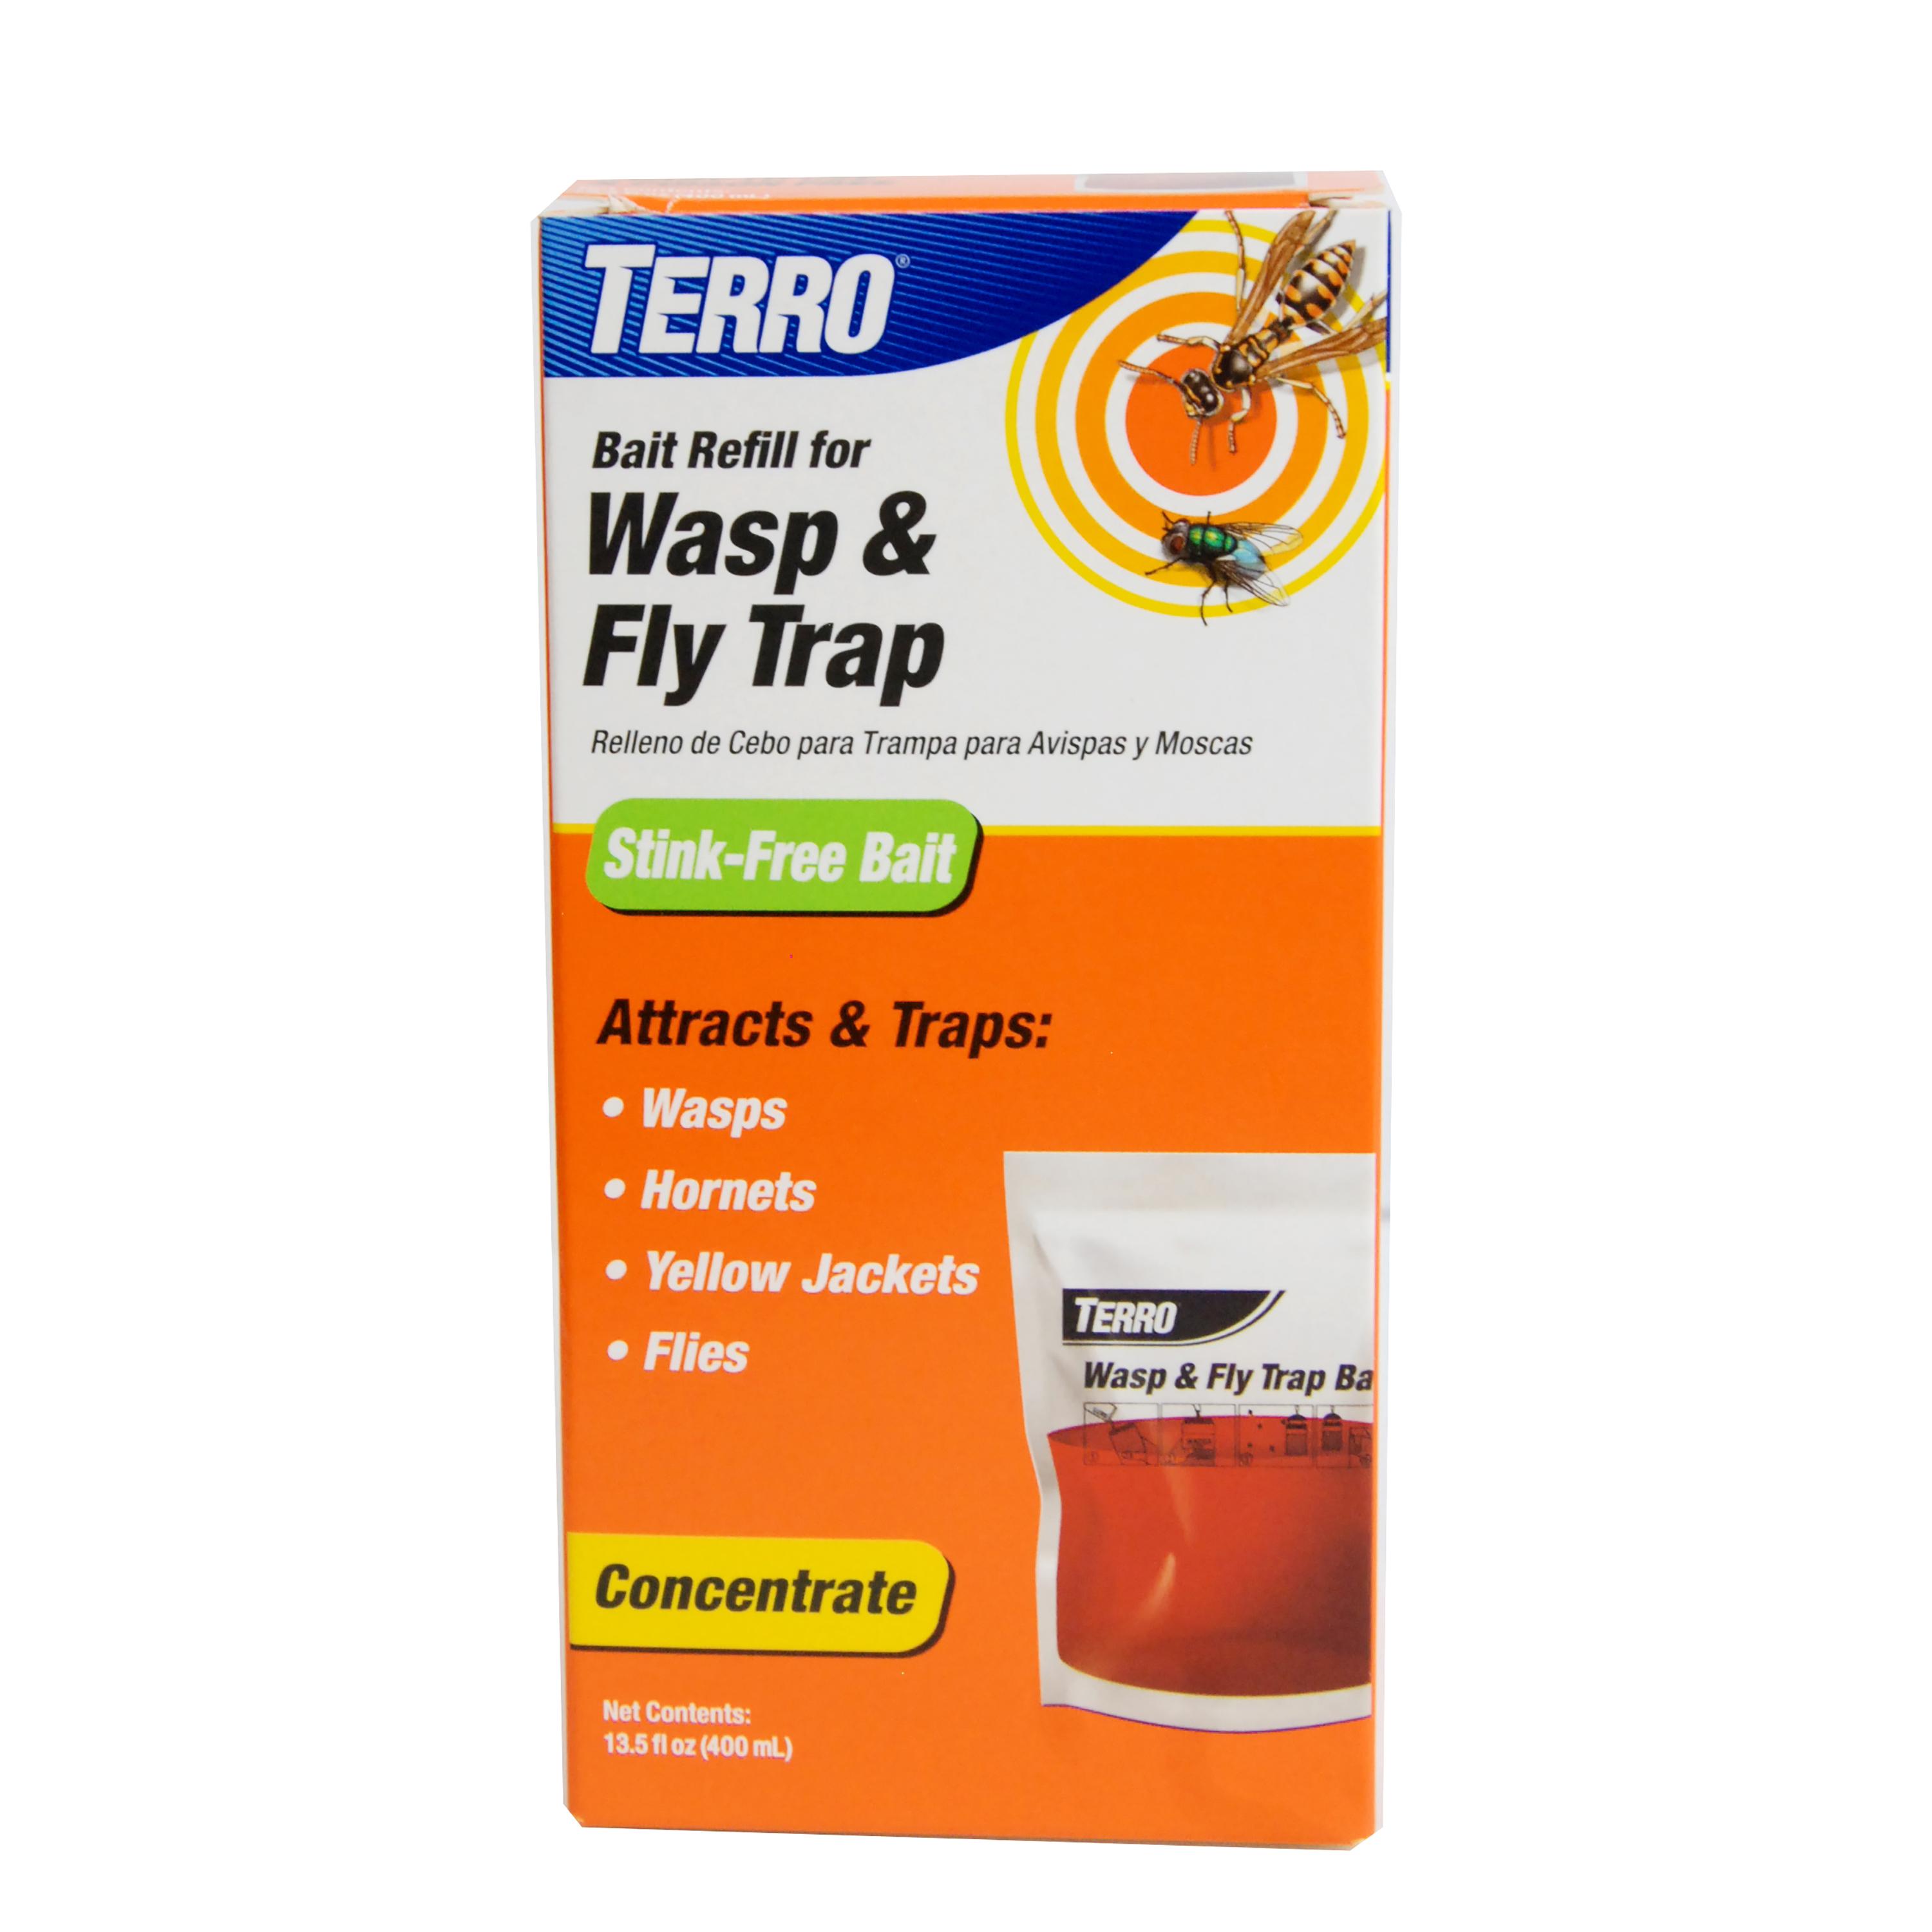  Raid Fruit Fly Traps - 2 Lures + 2 Refills